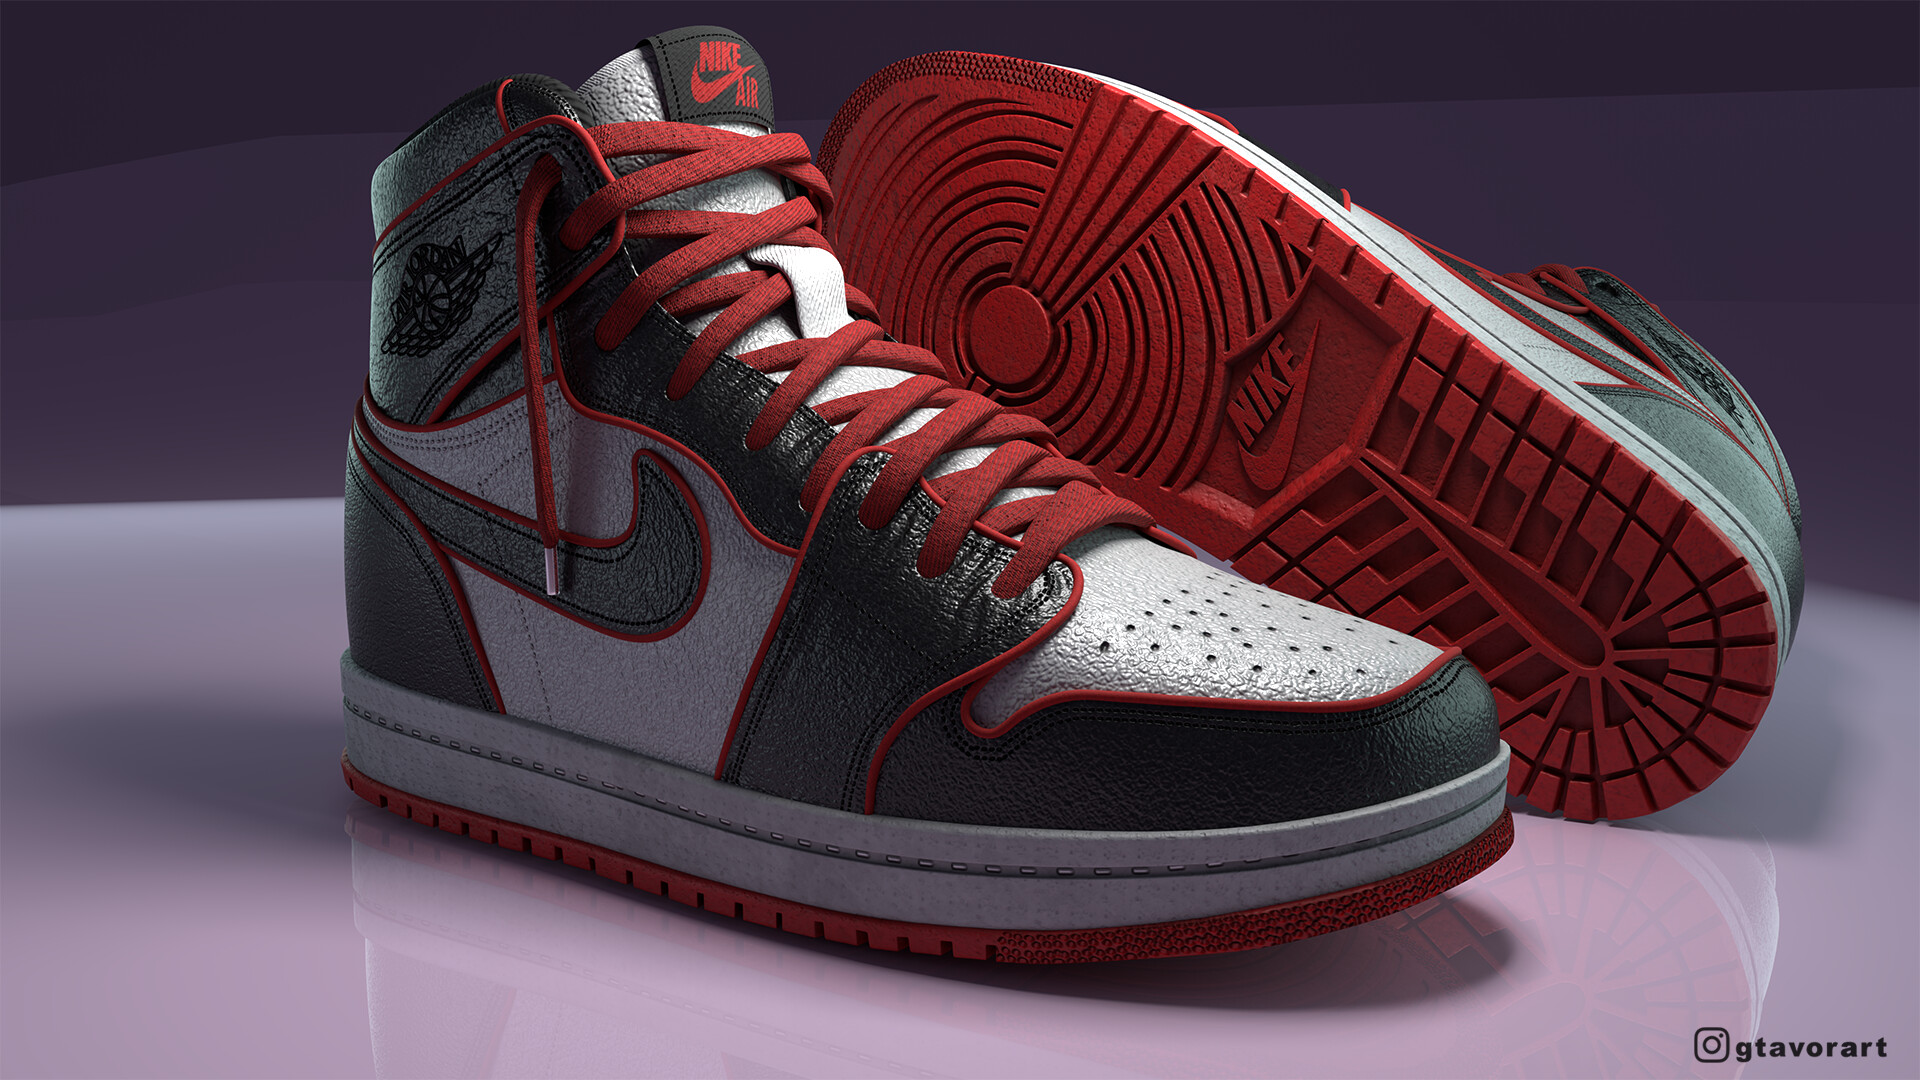 ArtStation - M.M. Spider-man (part 1 of 3) - Nike Jordan retro